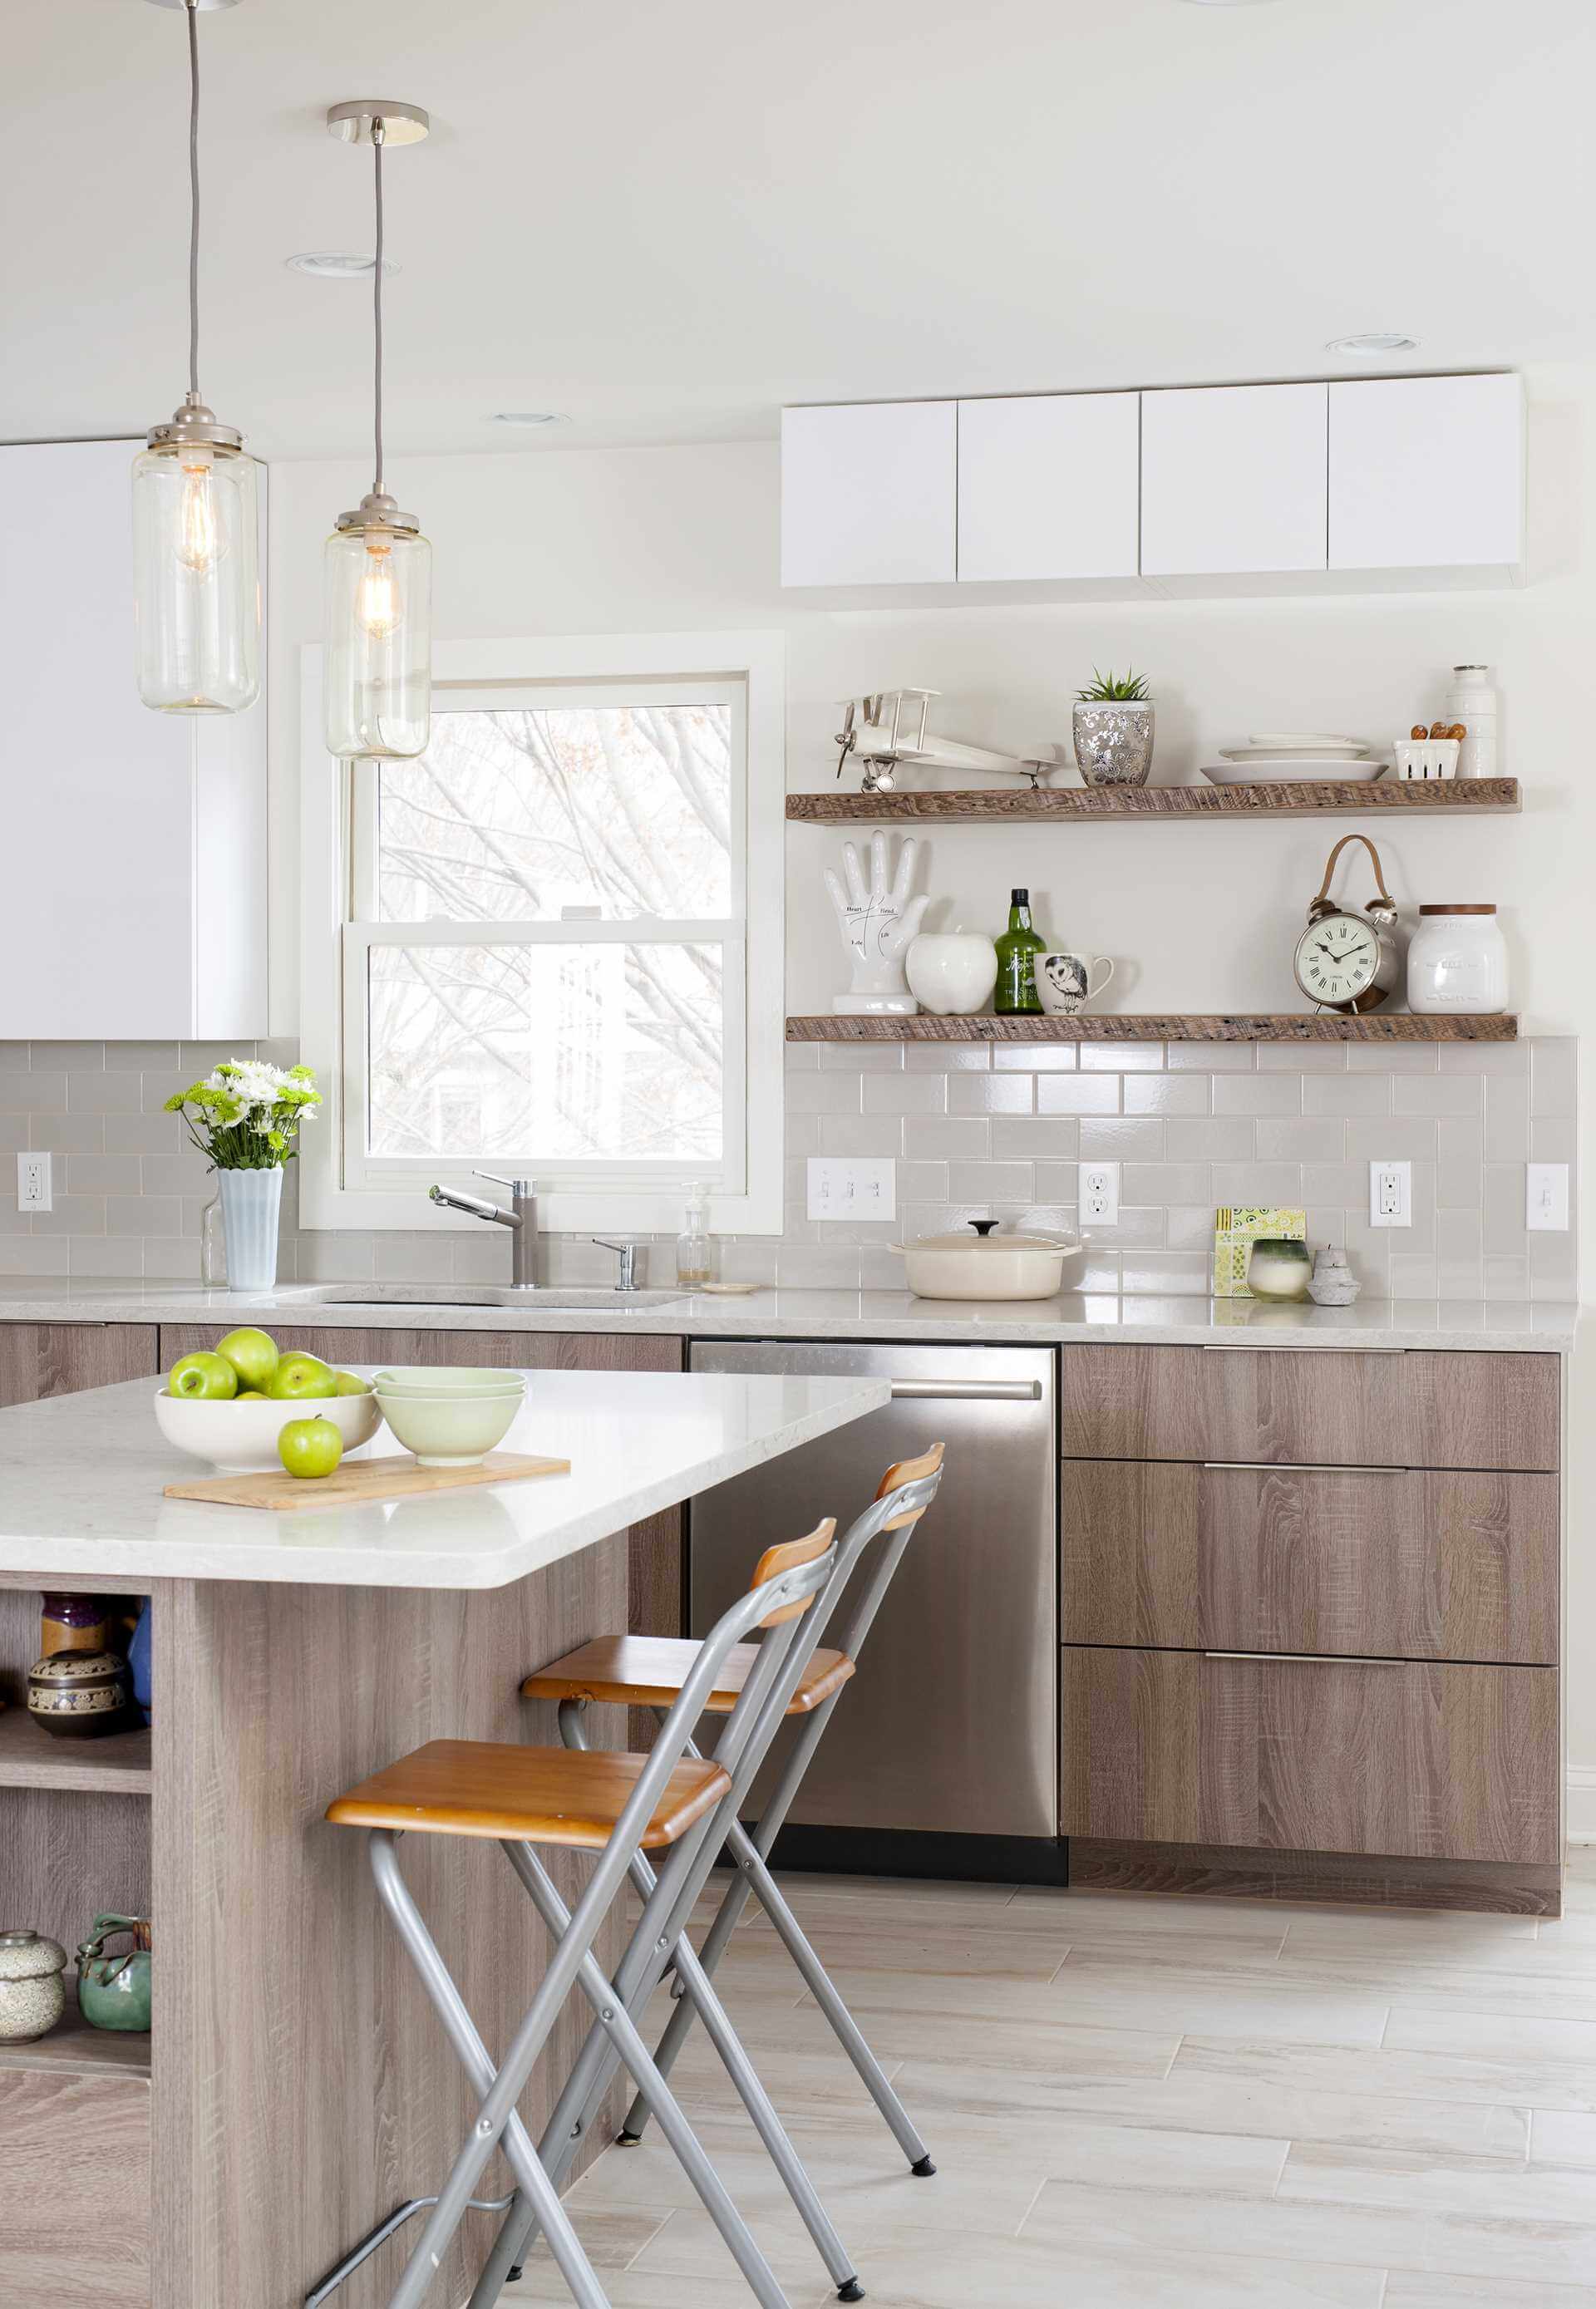 Top 10 Small Kitchen Design Tips Case Design/Remodeling